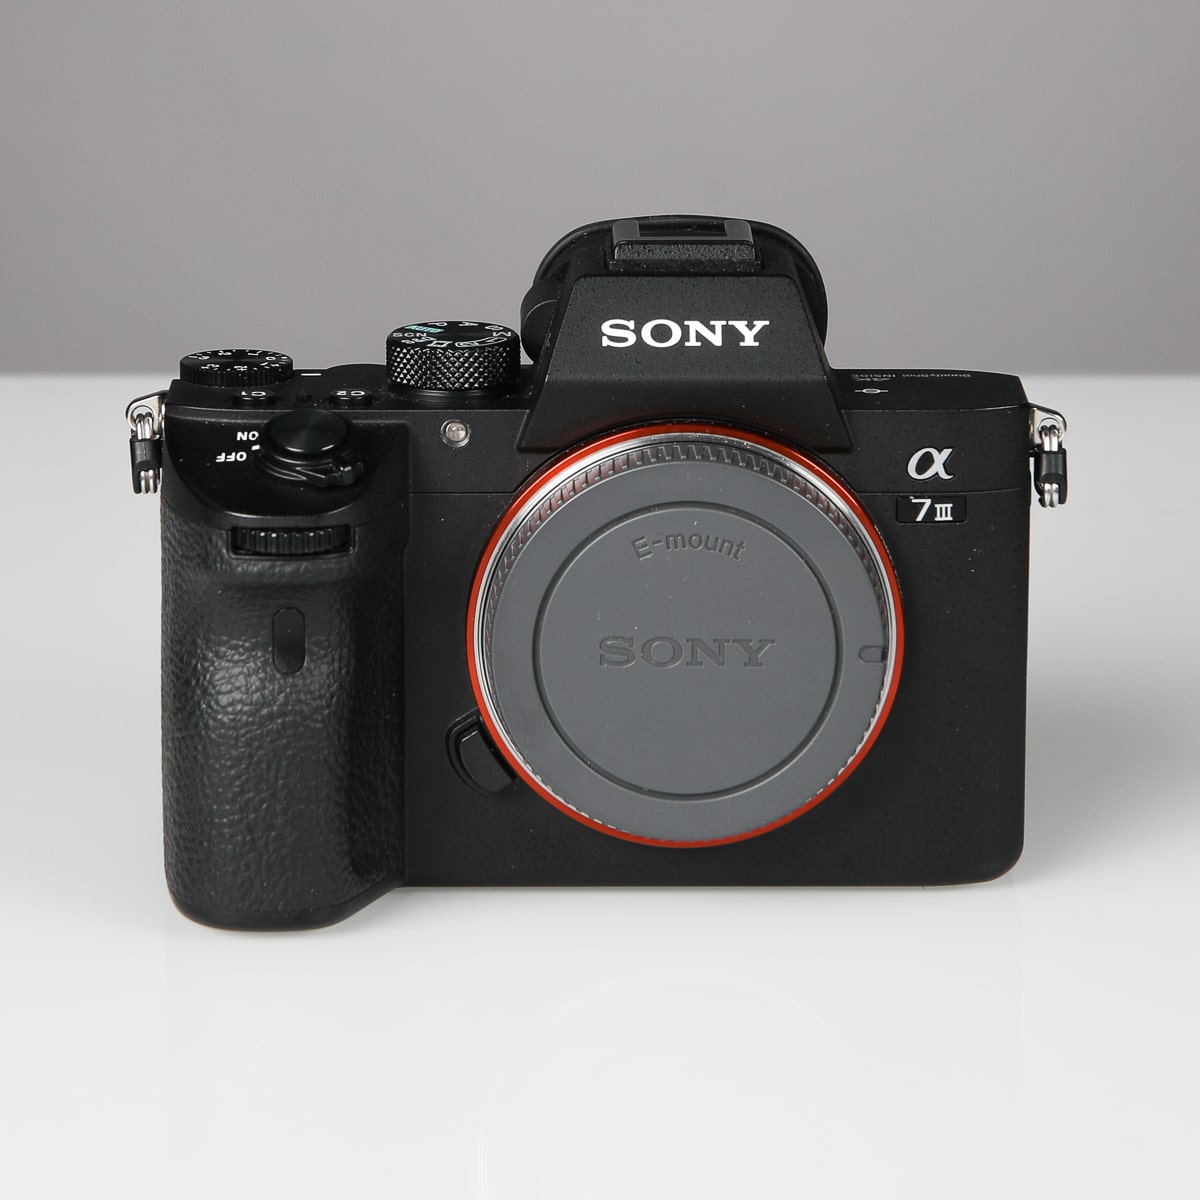 MYYTY Käytetty Sony A7 III runko